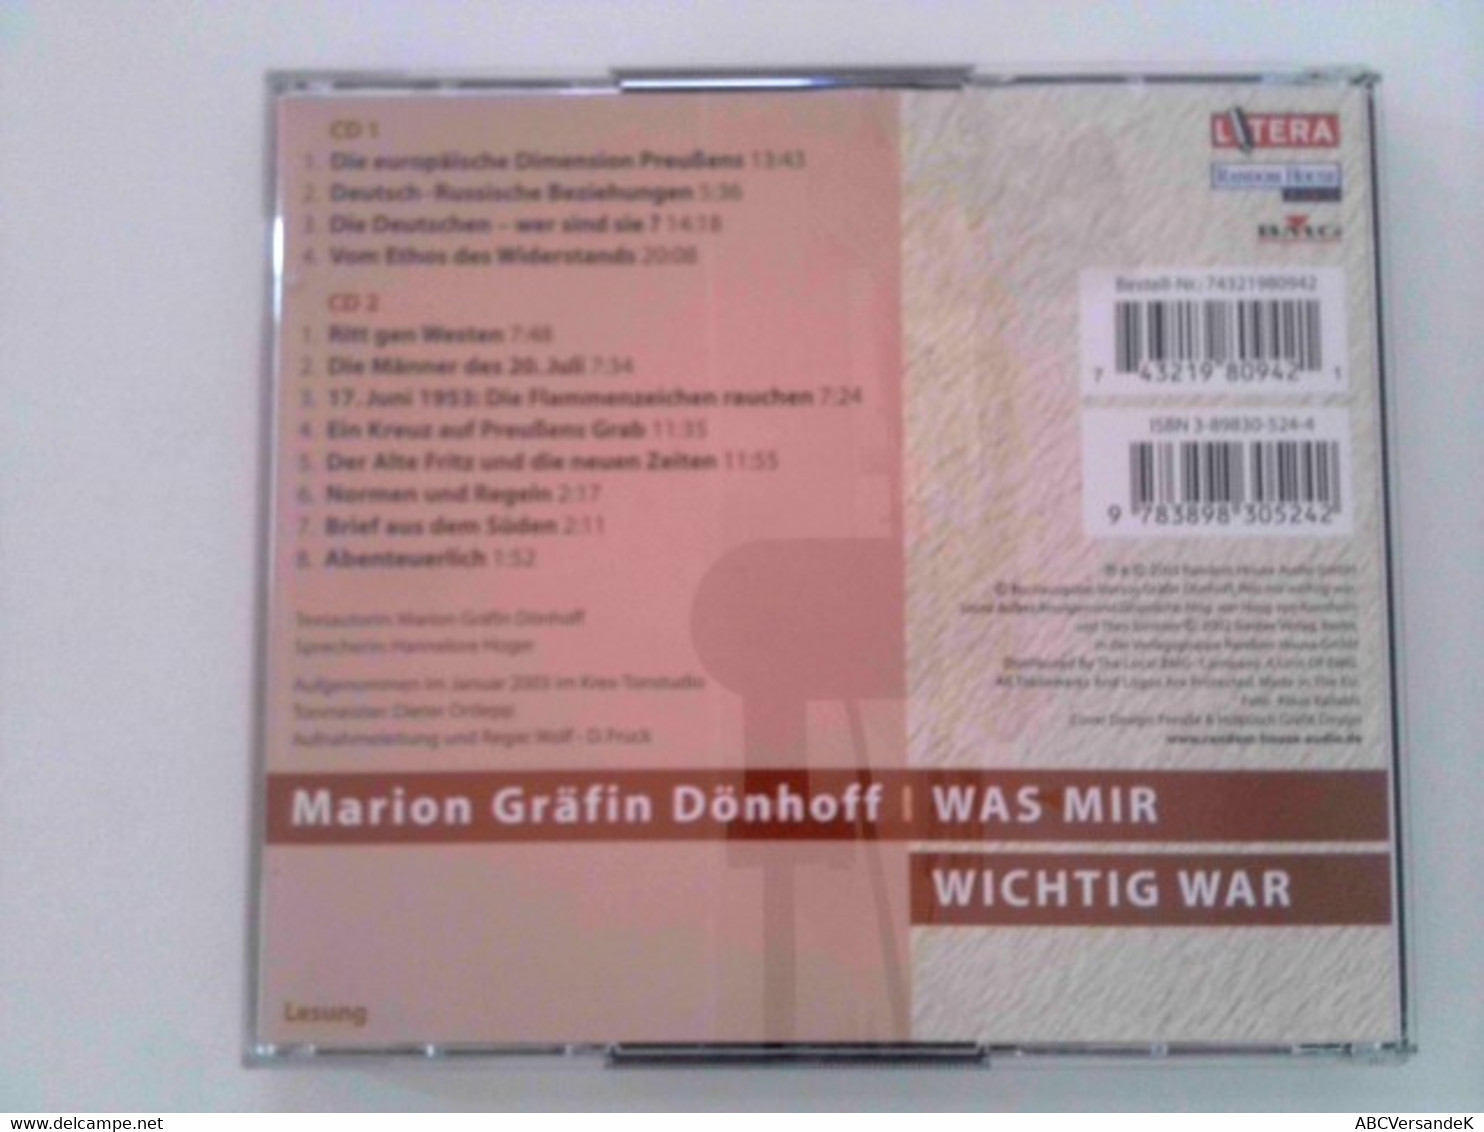 Was Mir Wichtig War - CD